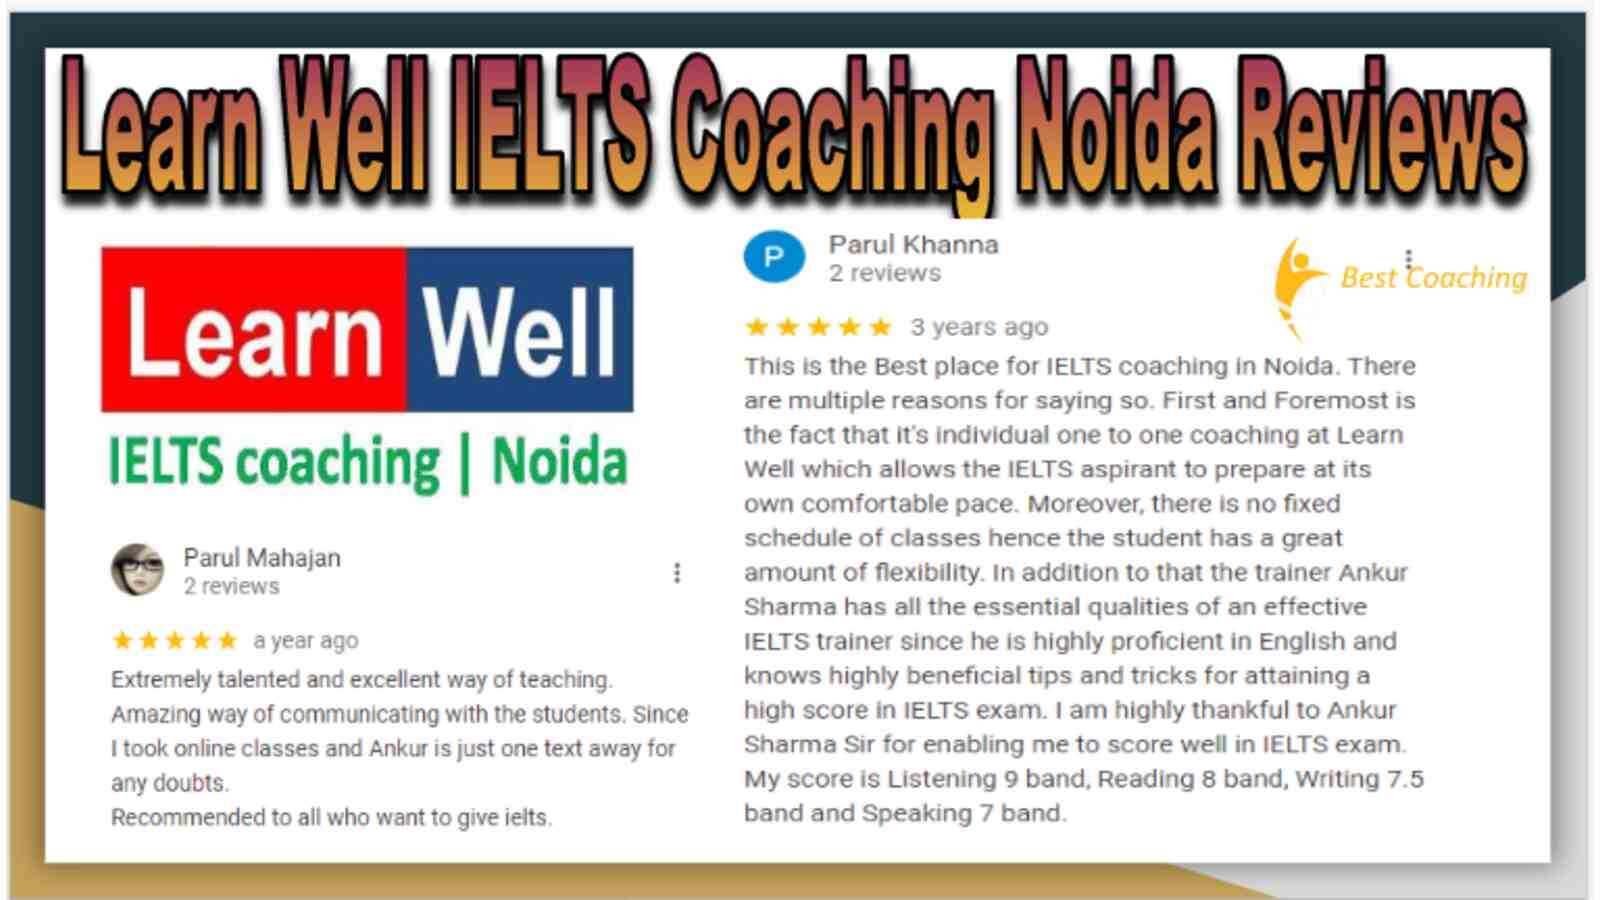 Learn Well IELTS Coaching Noida Reviews